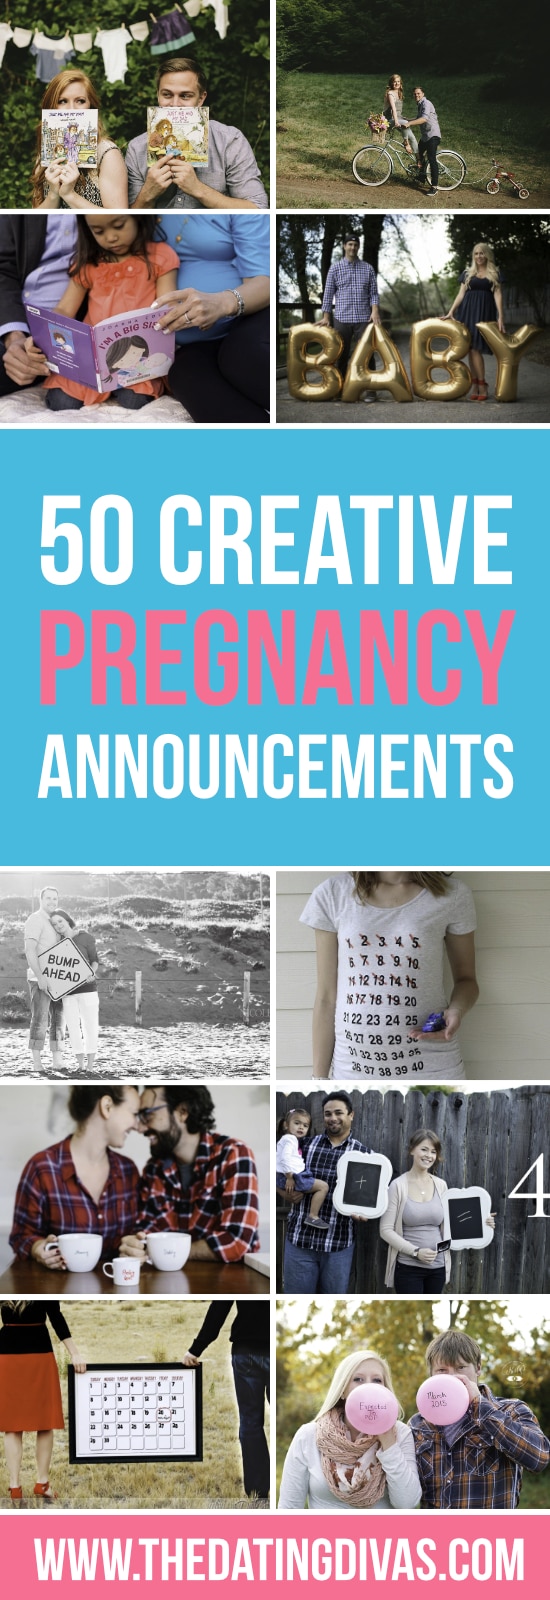 9 Creative Pregnancy Announcement Ideas